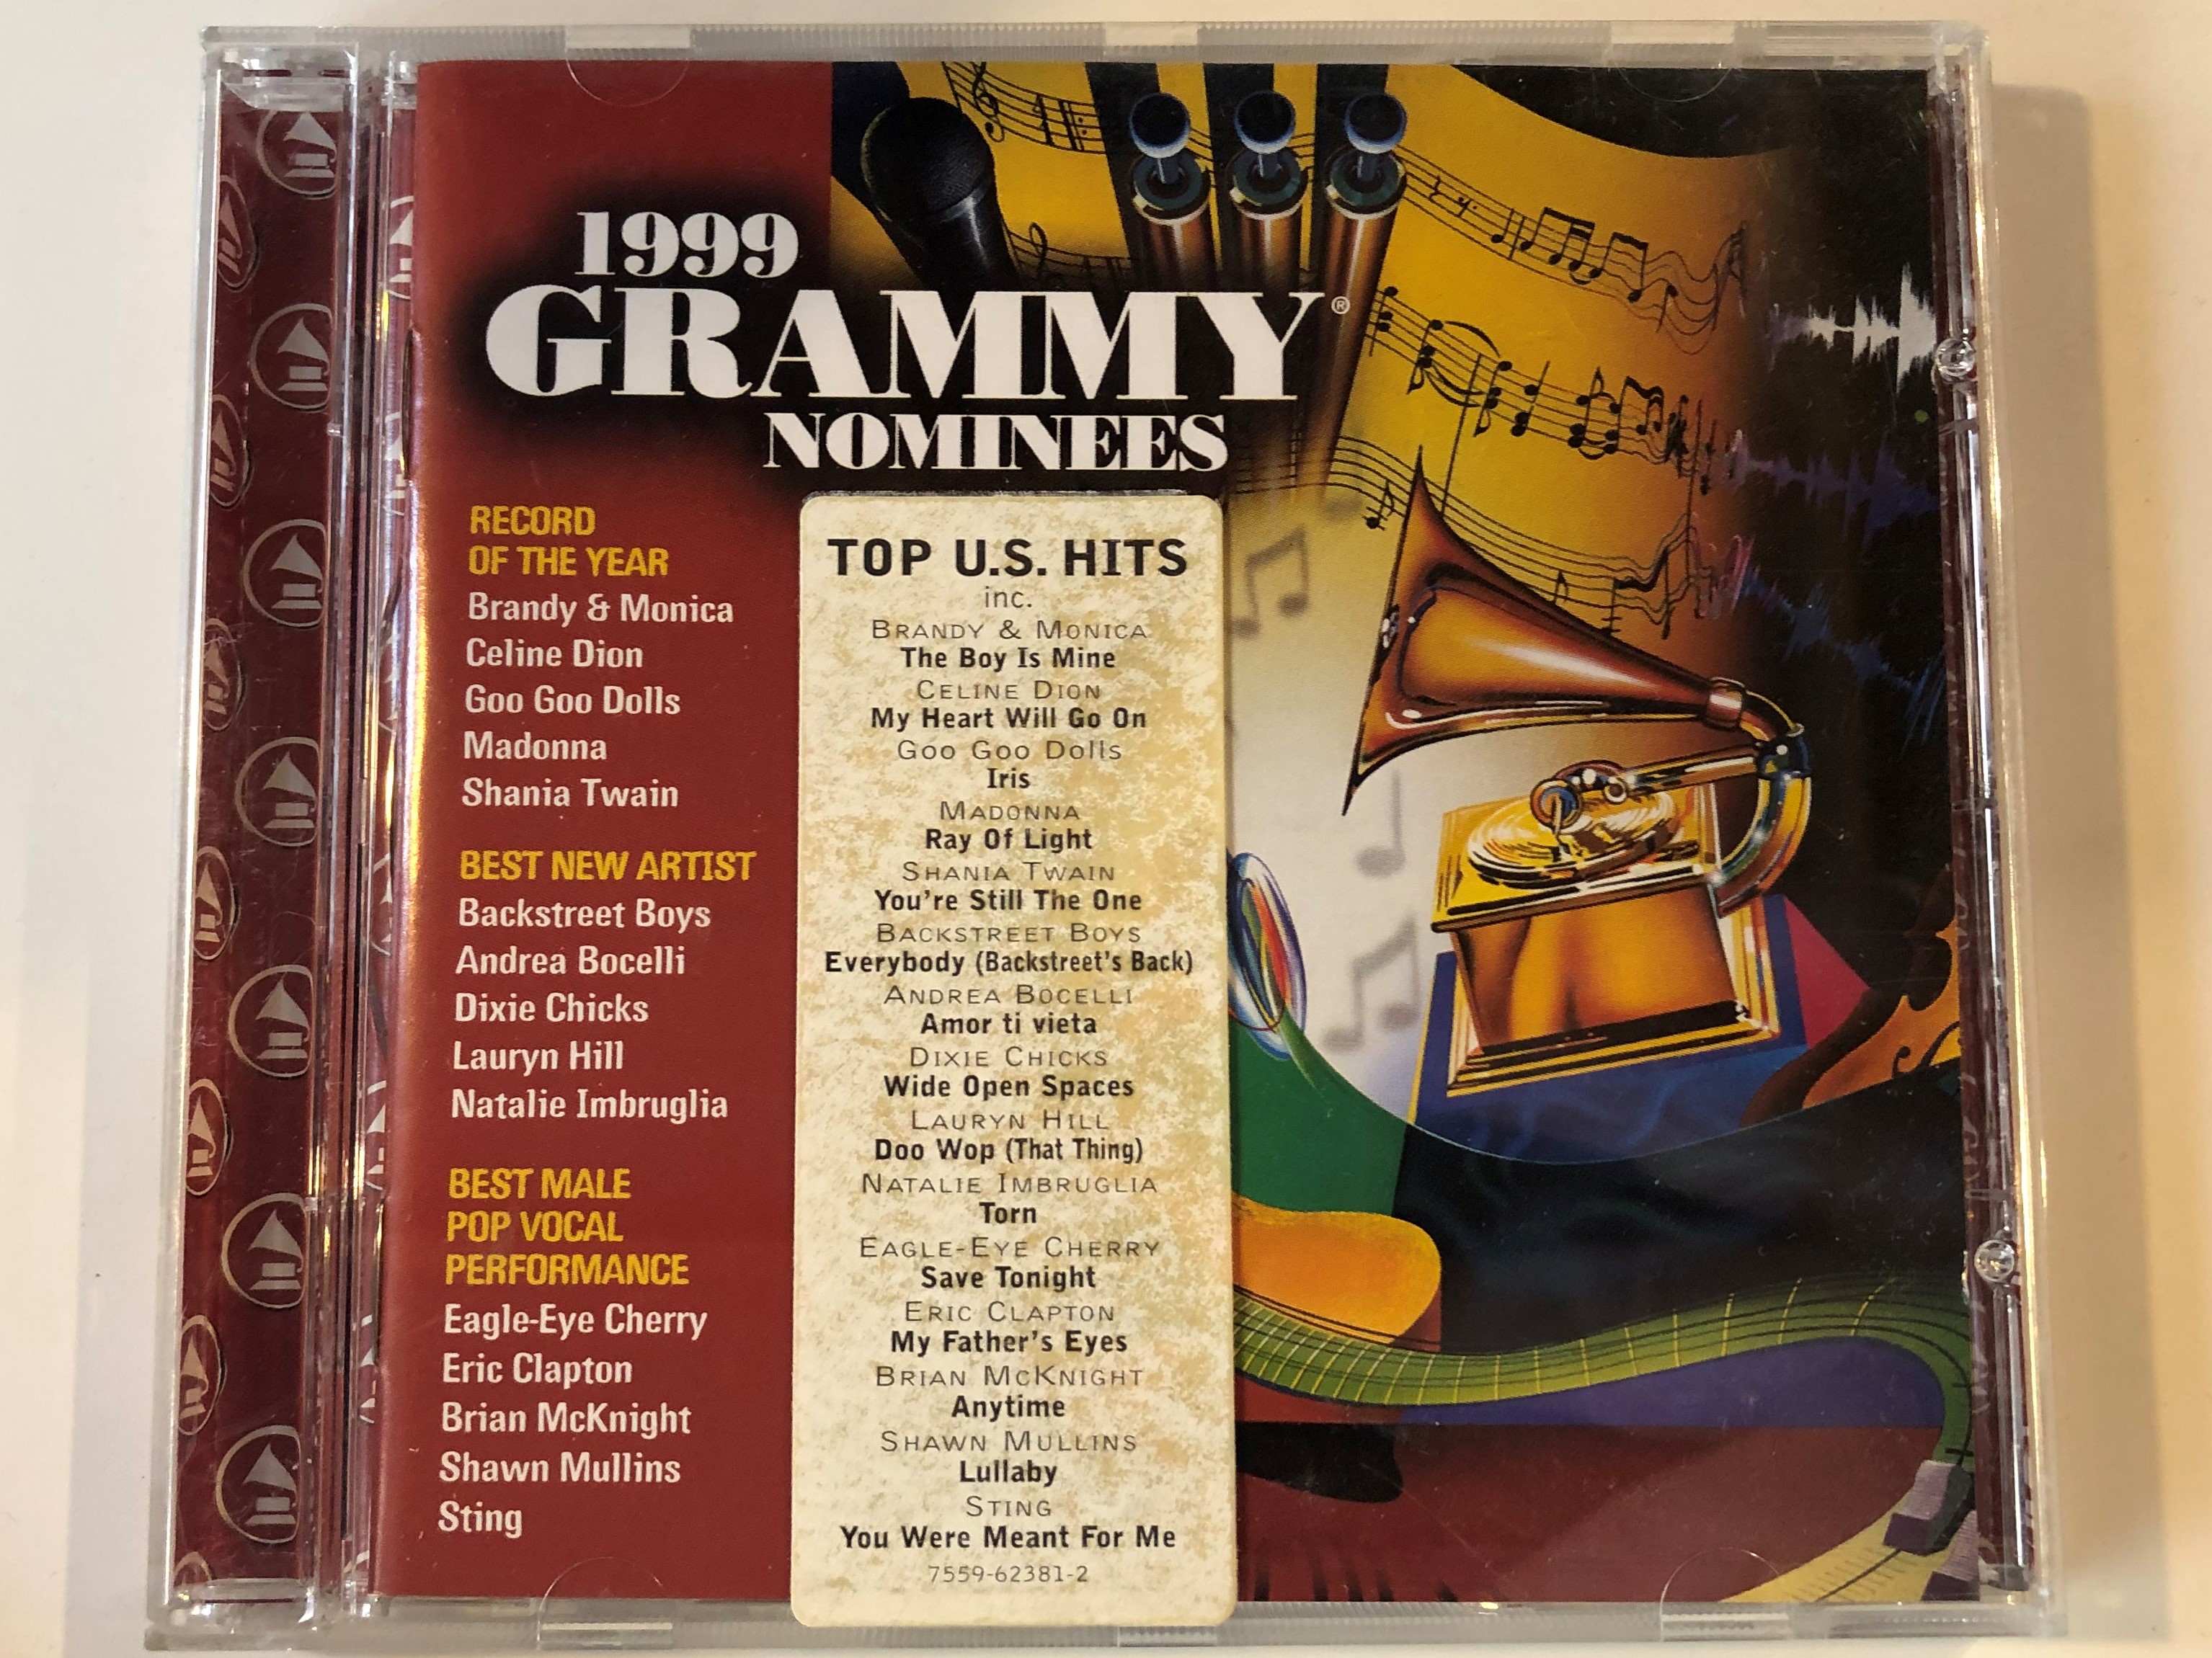 1999-grammy-nominees-top-u.-s.-hits-inc.-brandy-monica-the-boy-is-mine-celine-dion-my-heart-will-go-on-goo-goo-dolls-iris-madonna-ray-of-light-shania-twain-you-re-still-the-one-1-.jpg